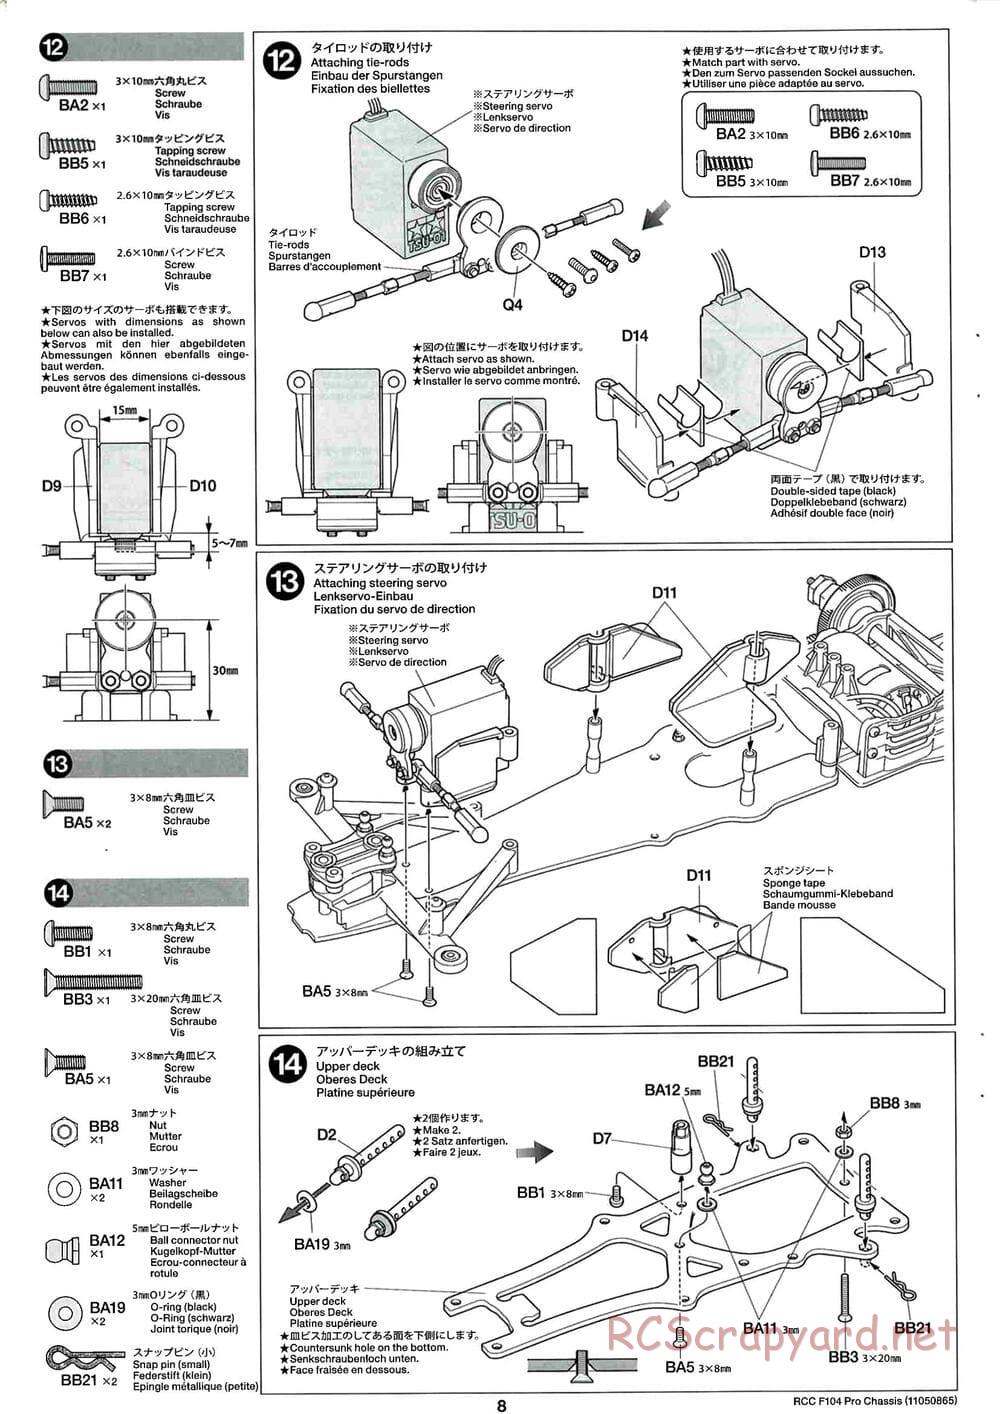 Tamiya - F104 Pro Chassis - Manual - Page 8